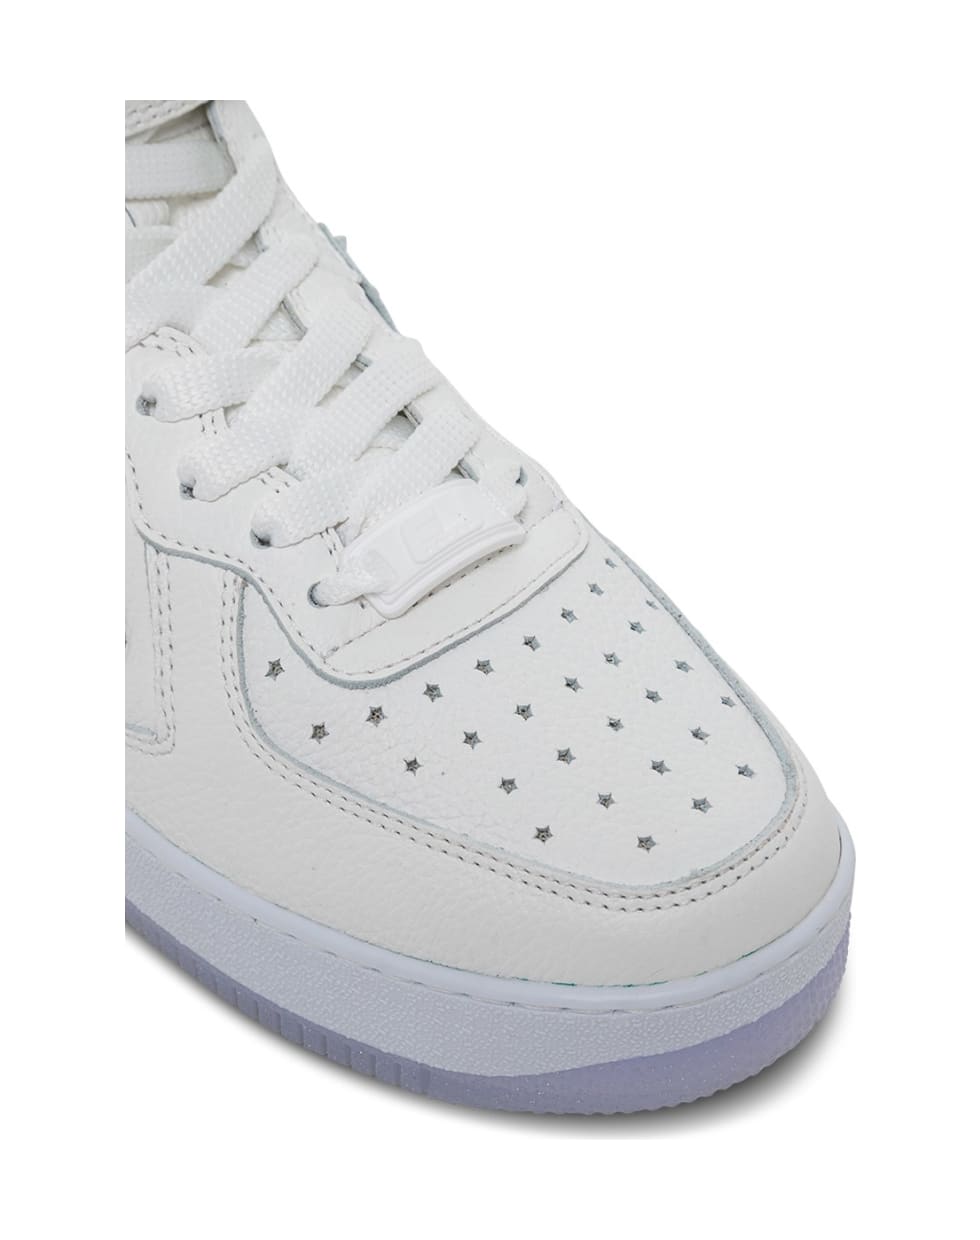 Enterprise Japan Rocket White Leather Sneakers With Logo - White